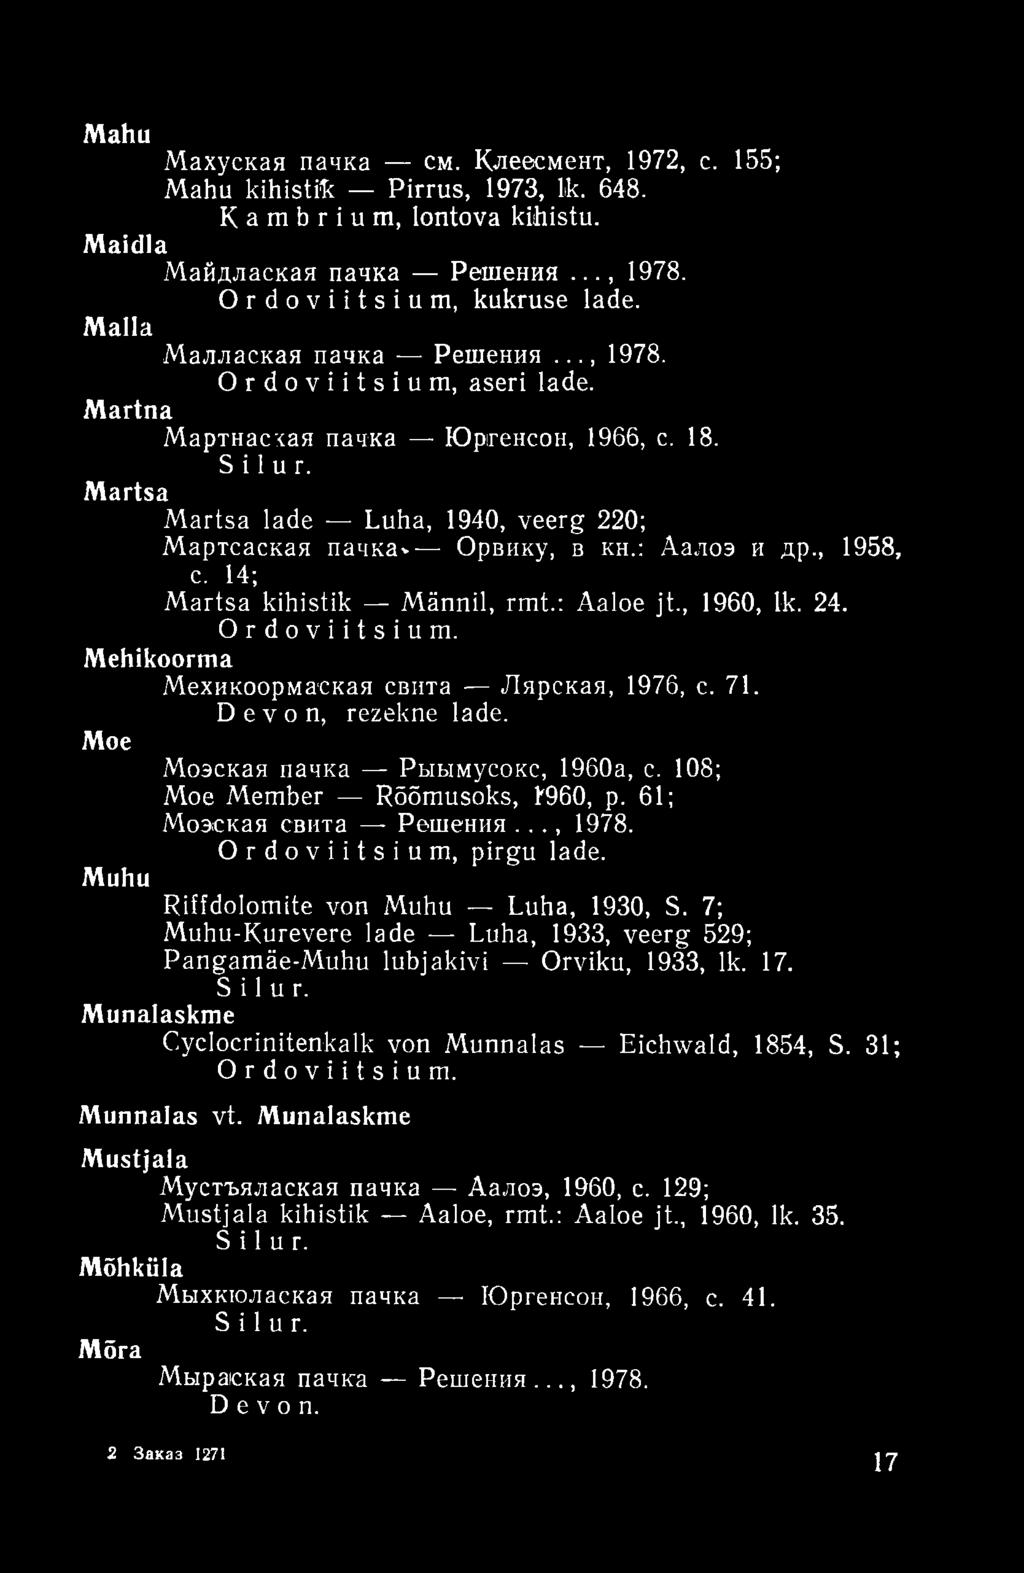 : Аалоэ и др., 1958, с. 14; M artsa kihistik Männil, rmt.: Aaloe jt., 1960, lk. 24. Ordoviitsium. Mehikoorma Мехикоормаская свита - Лярская, 1976, с. 71. Devon, rezekne lade.